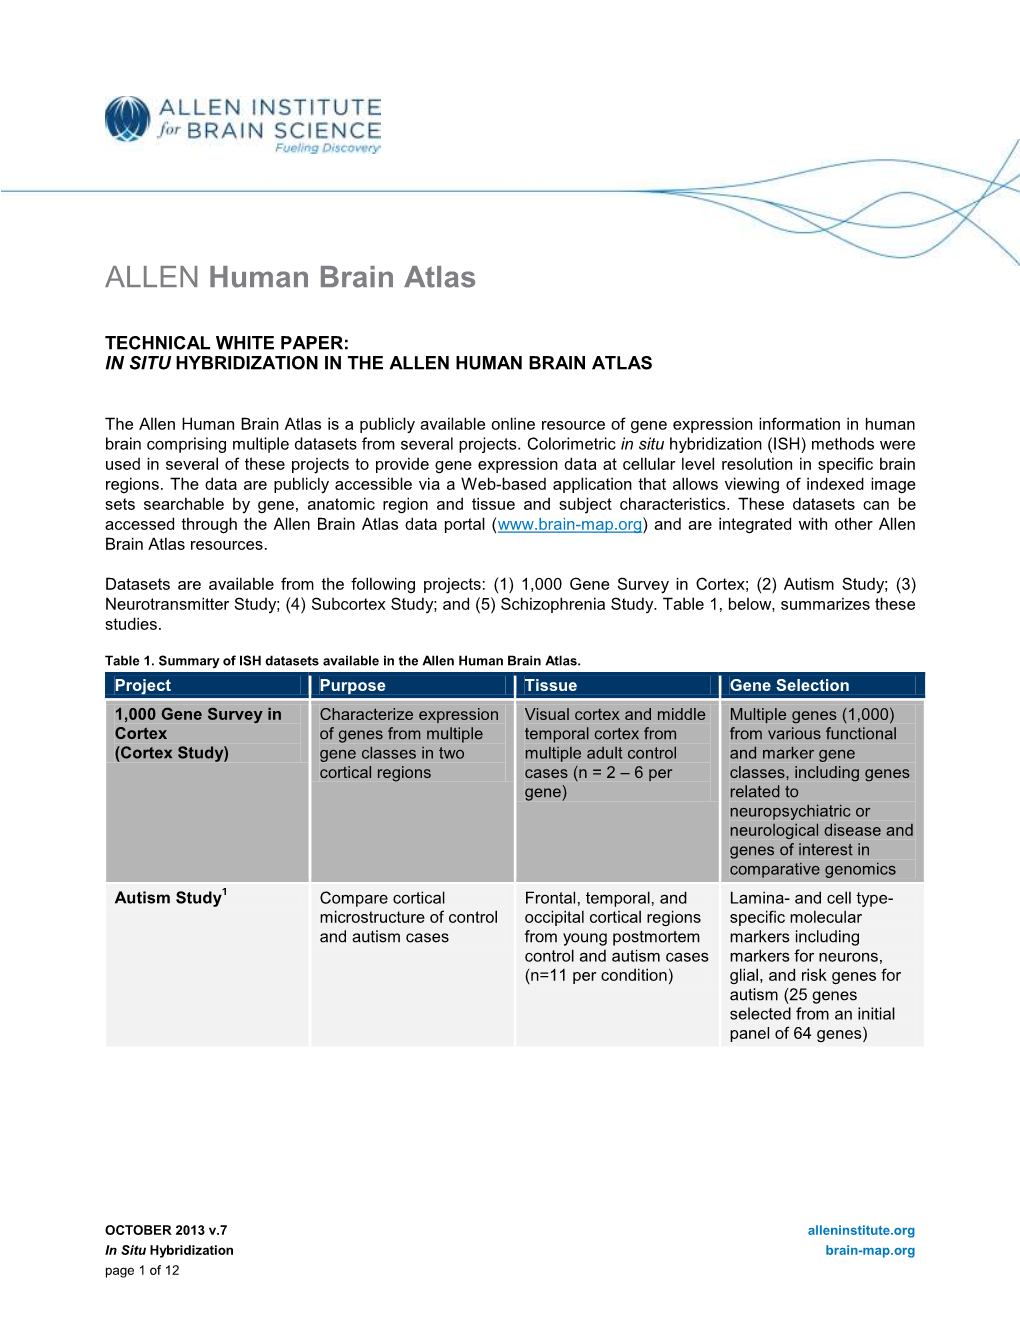 Technical White Paper: in Situ Hybridization in the Allen Human Brain Atlas